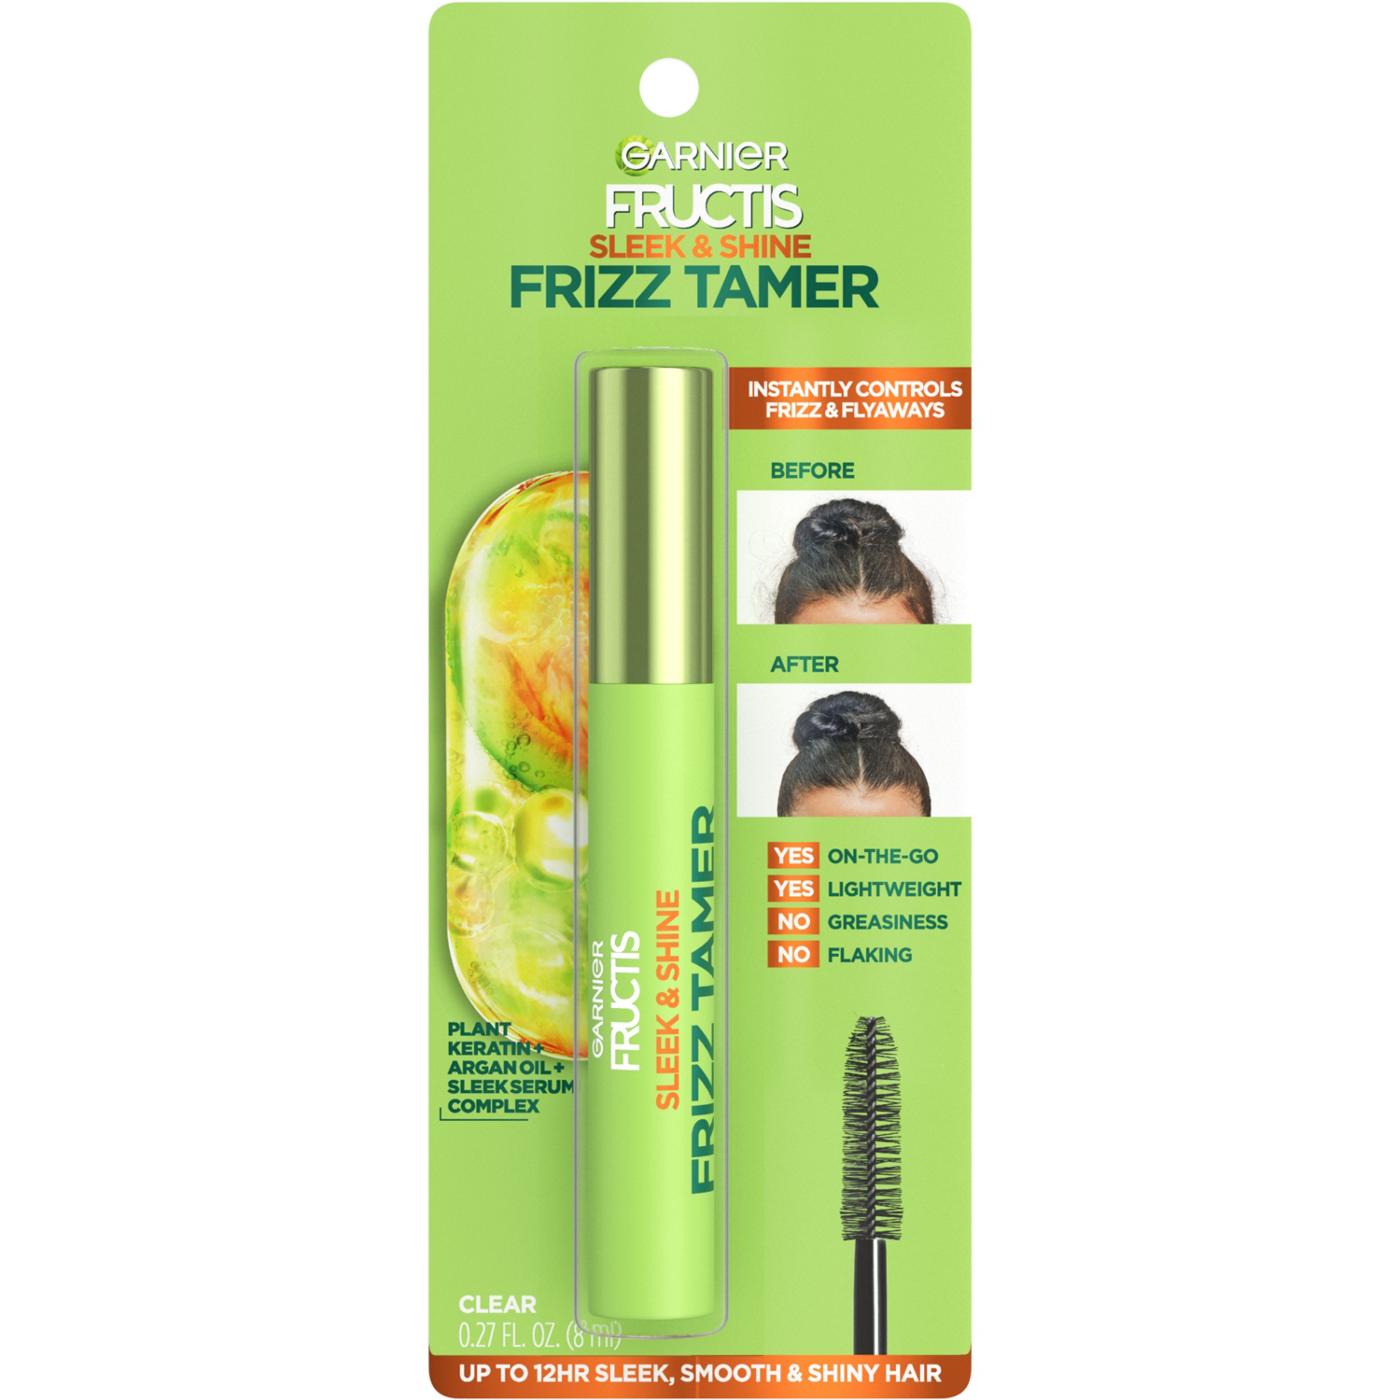 Garnier Fructis Sleek & Shine Frizz Tamer; image 1 of 17